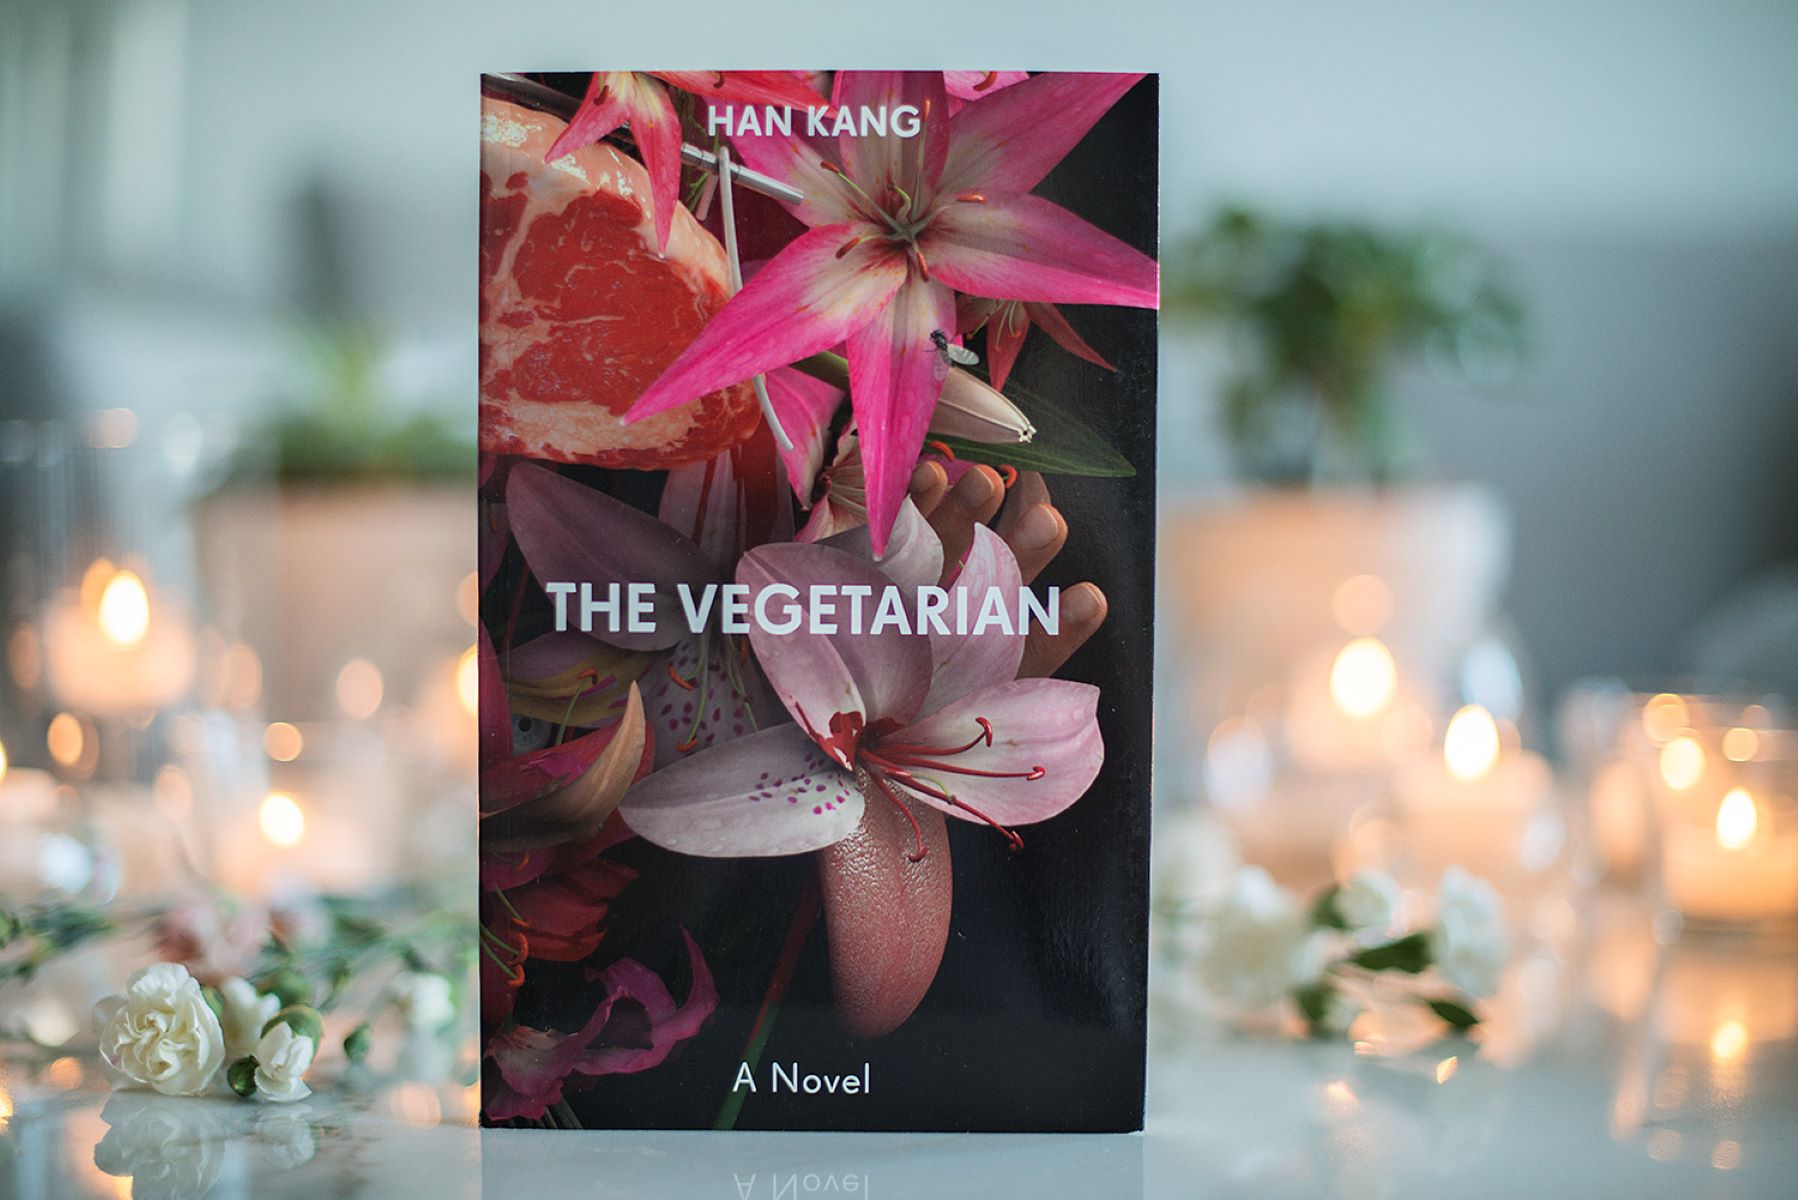 15-fascinating-facts-about-the-vegetarian-han-kang